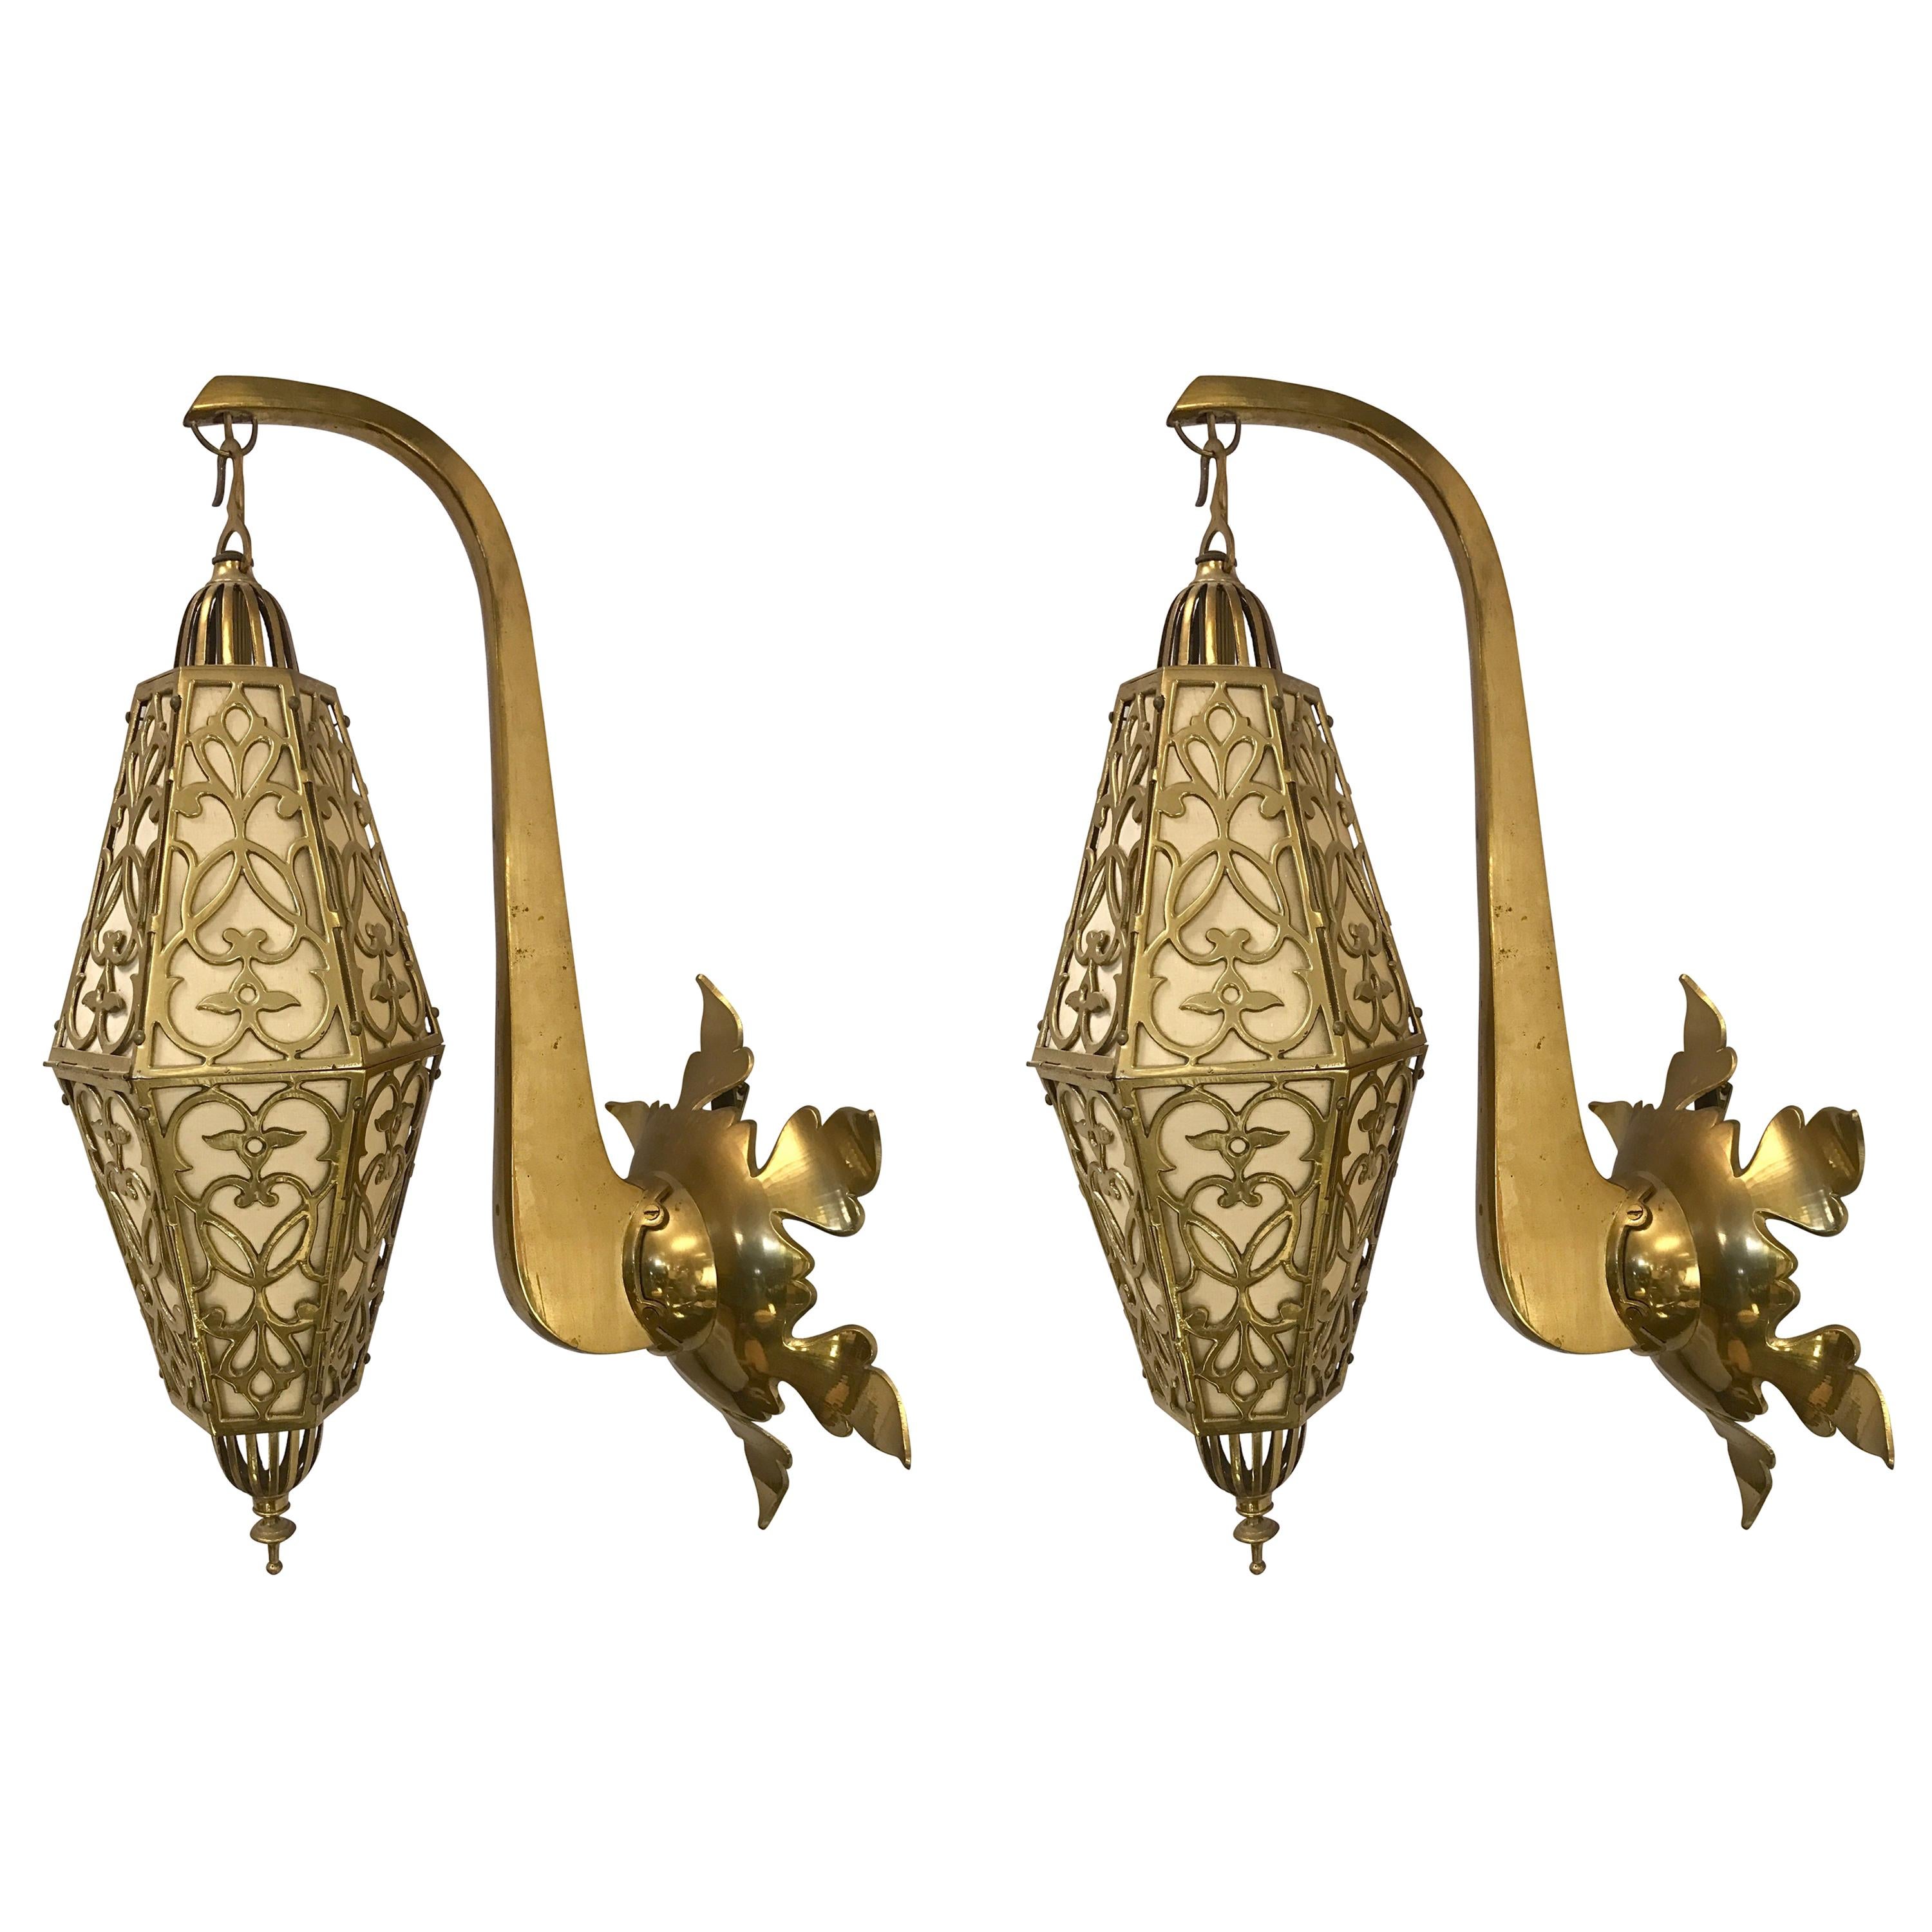 Pair of Art Deco French Latticed Brass Hanging Lanterns Sconces